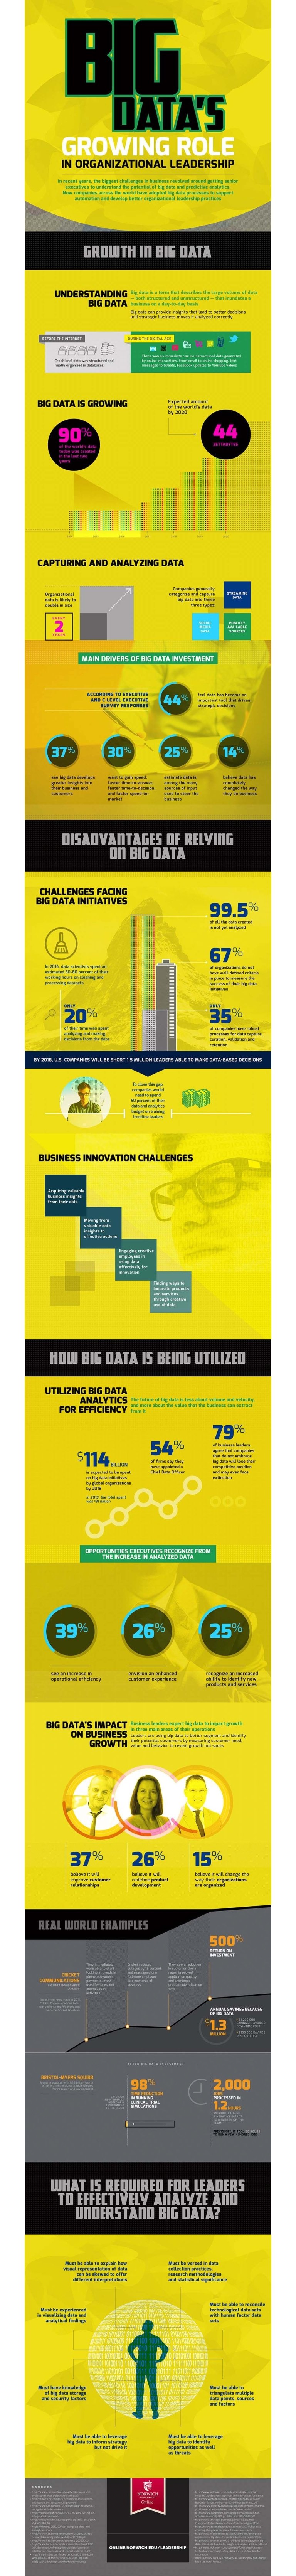 Infographic: Big Data’s Growing Role in Organizational Leadership & Development